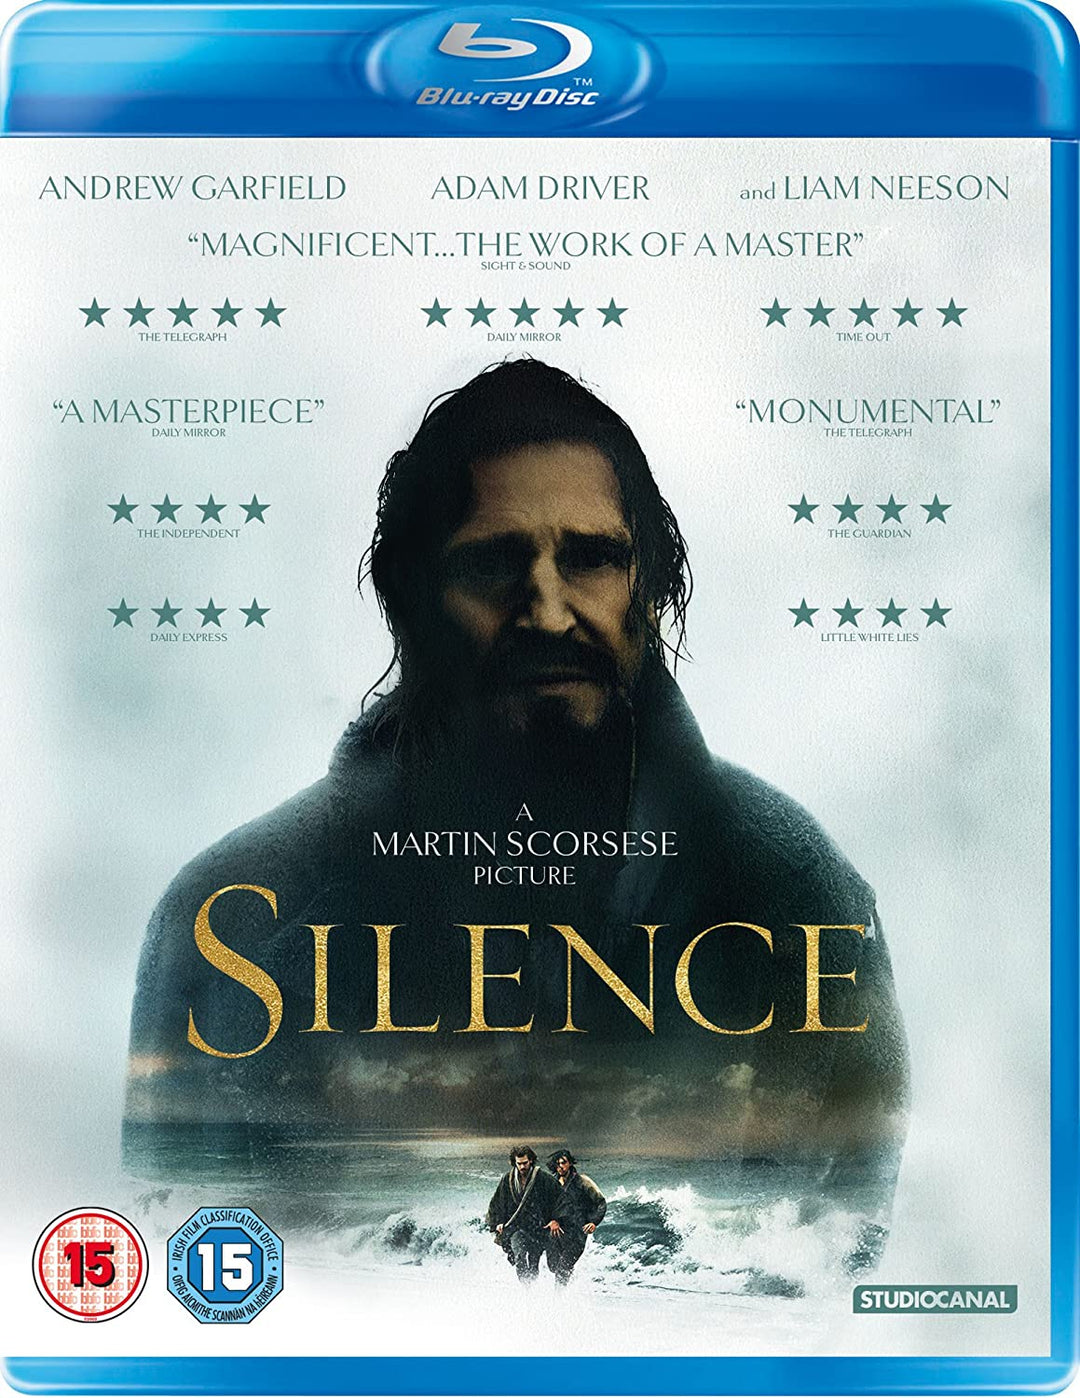 Silence [2017] - Drama/Historical [Blu-ray]